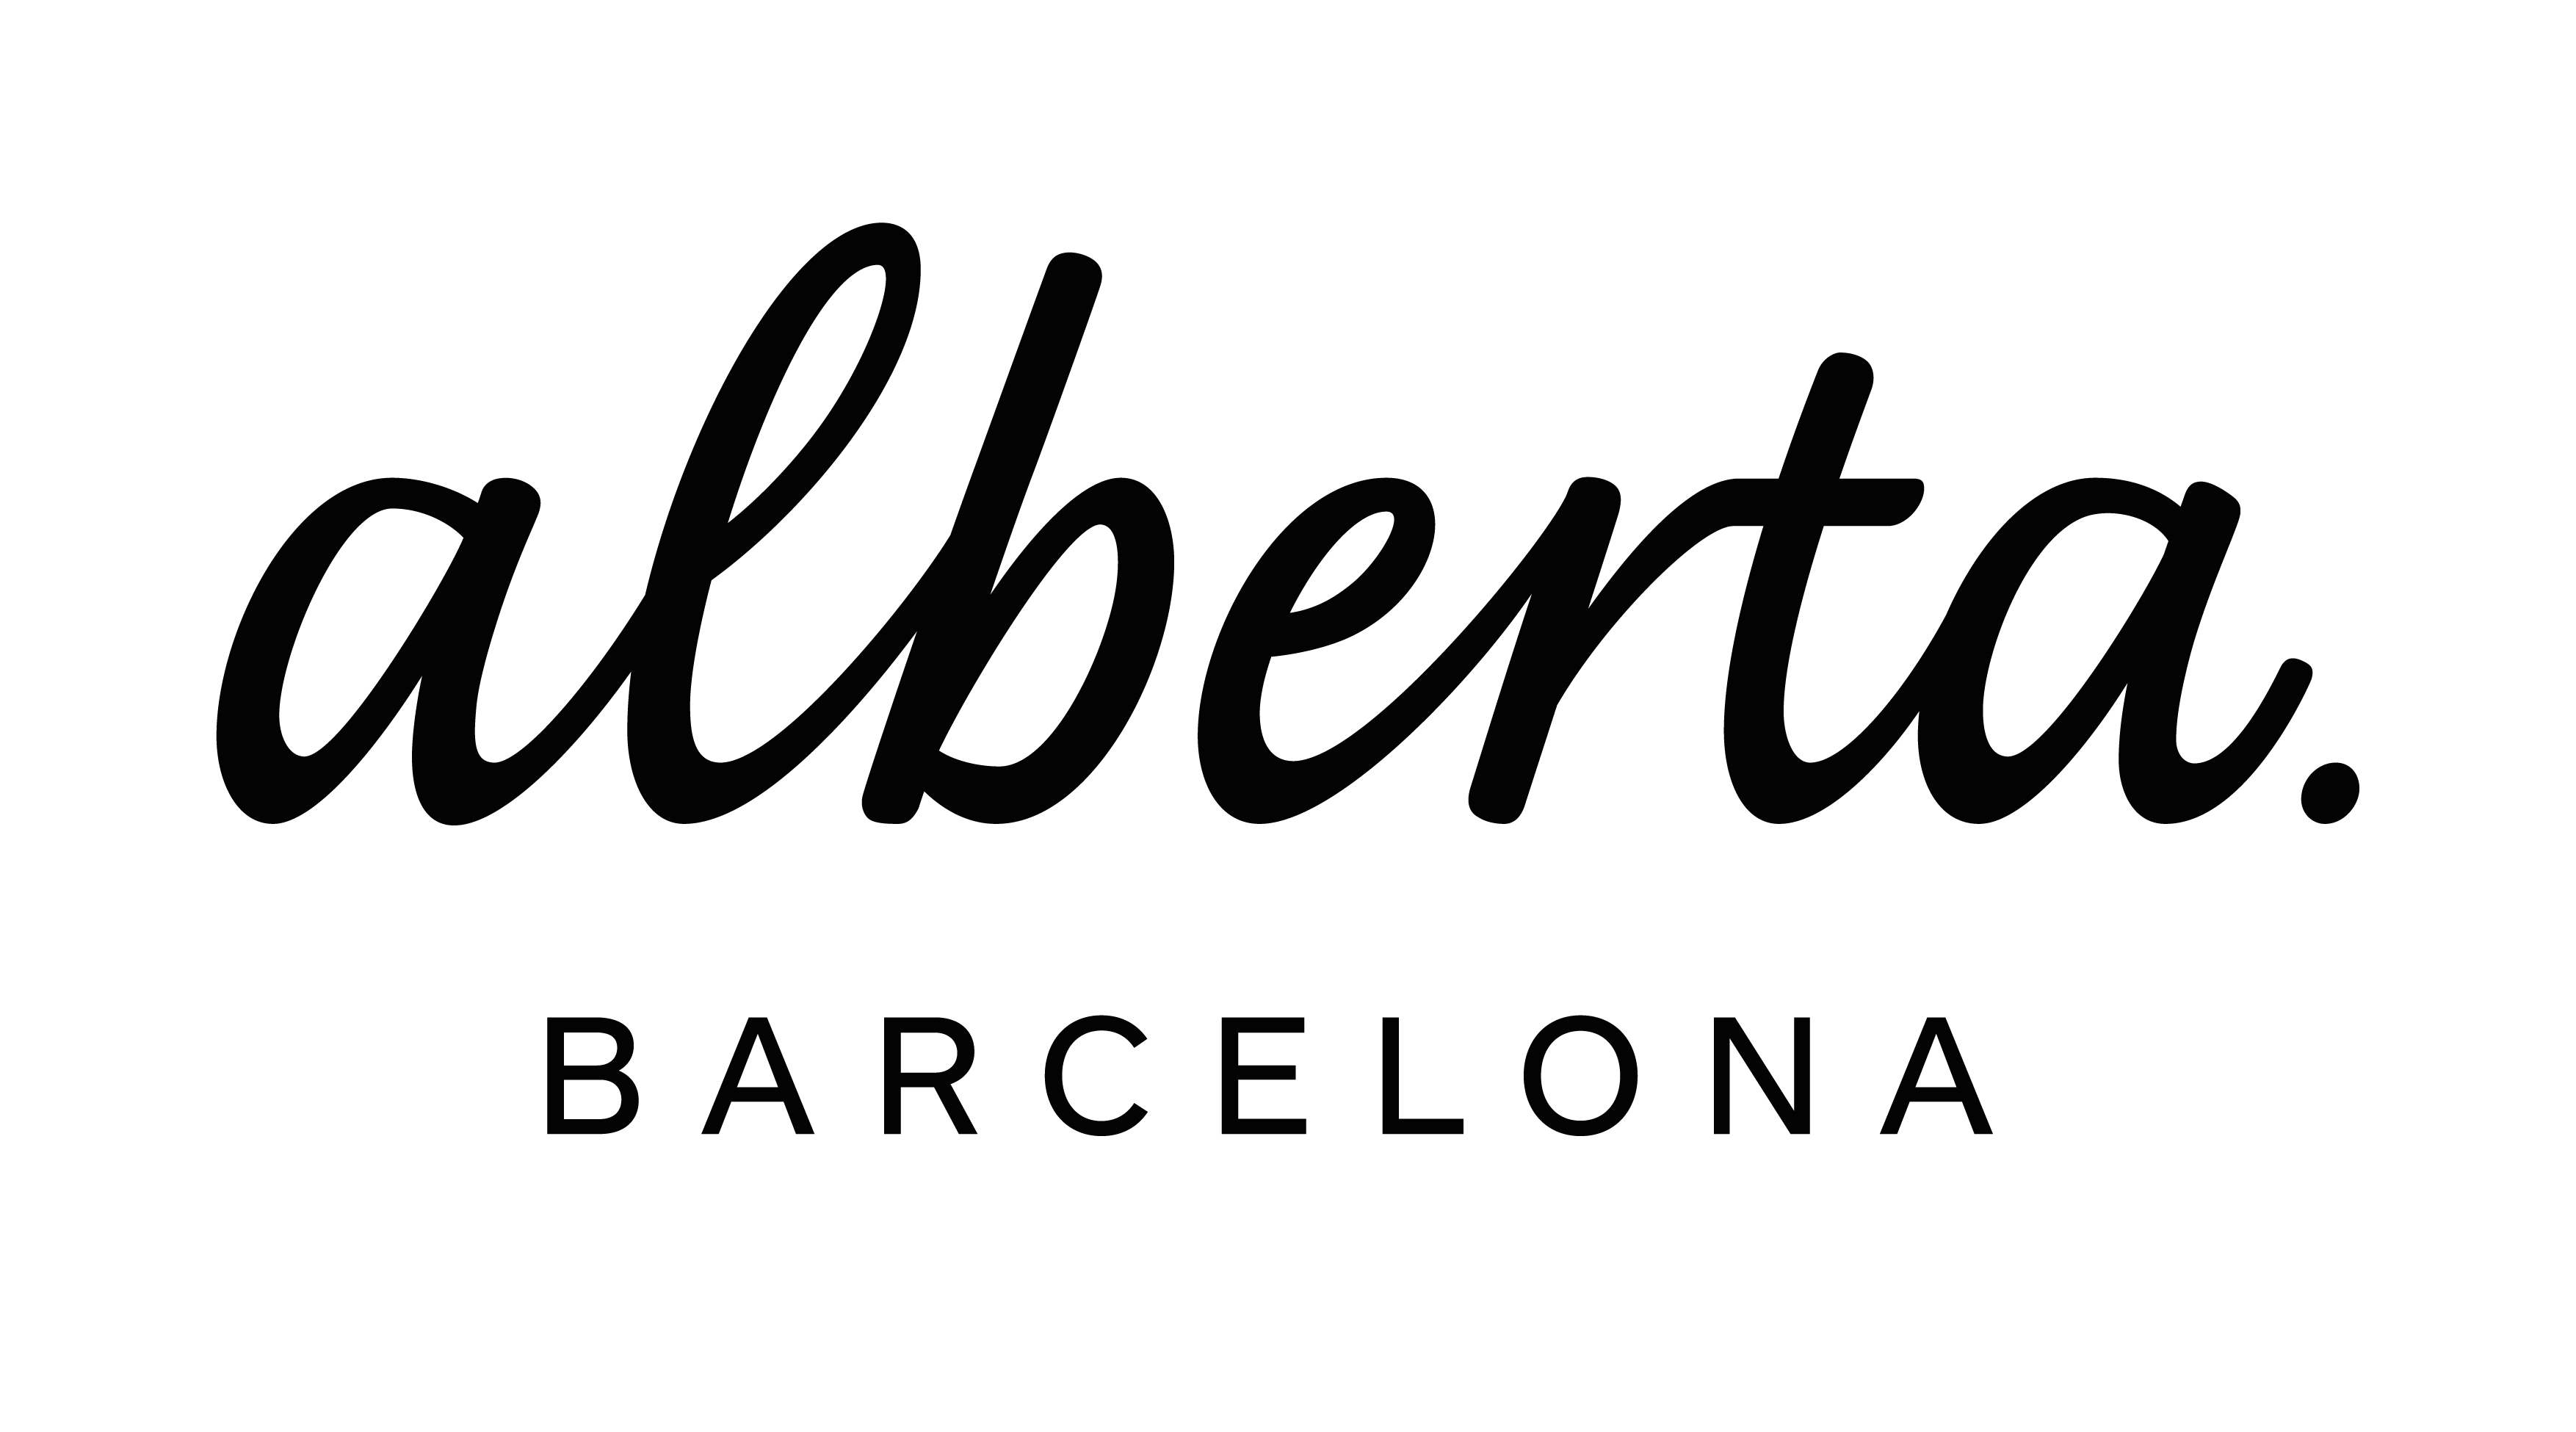 (c) Alberta.barcelona